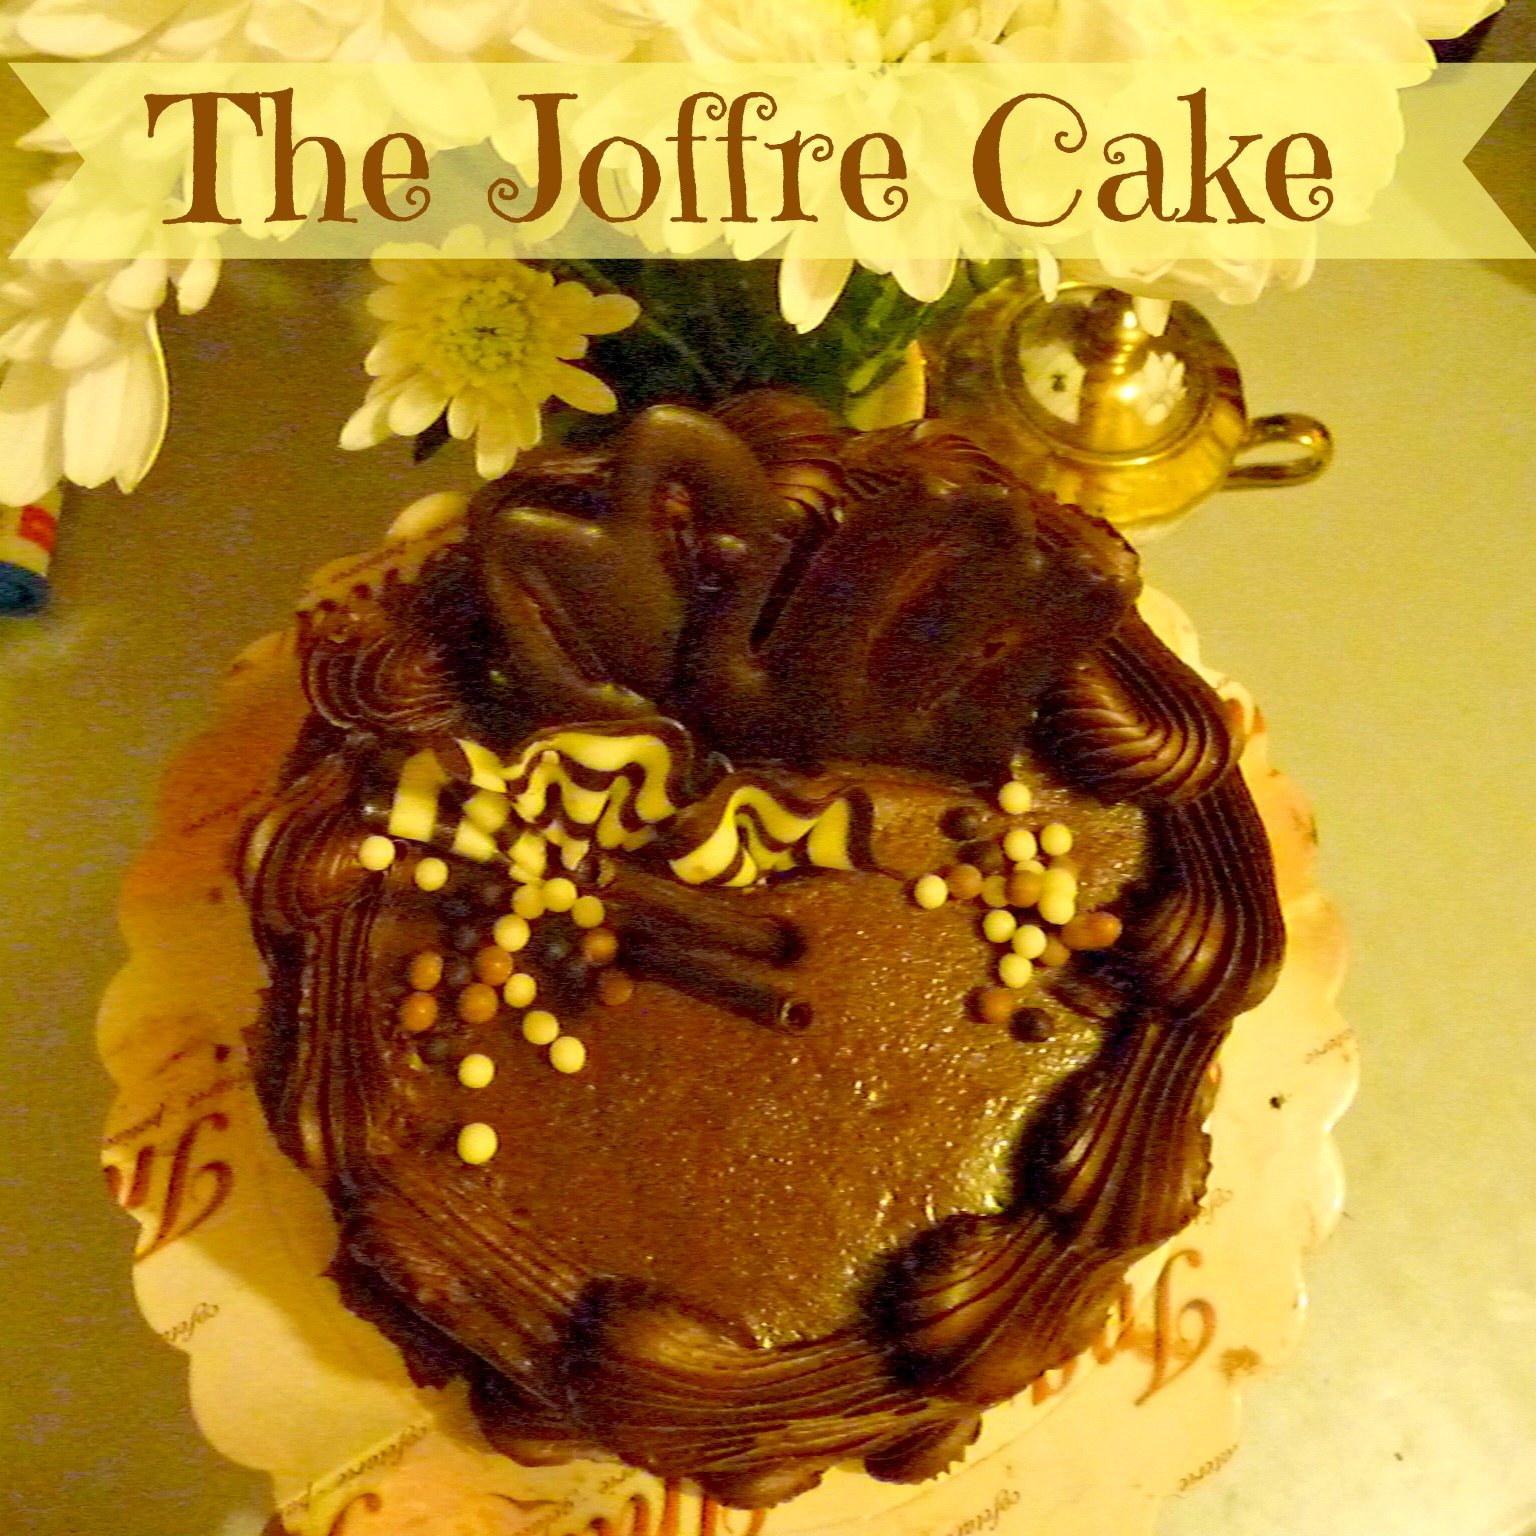 The ultimate chocolate cake – Joffre cake